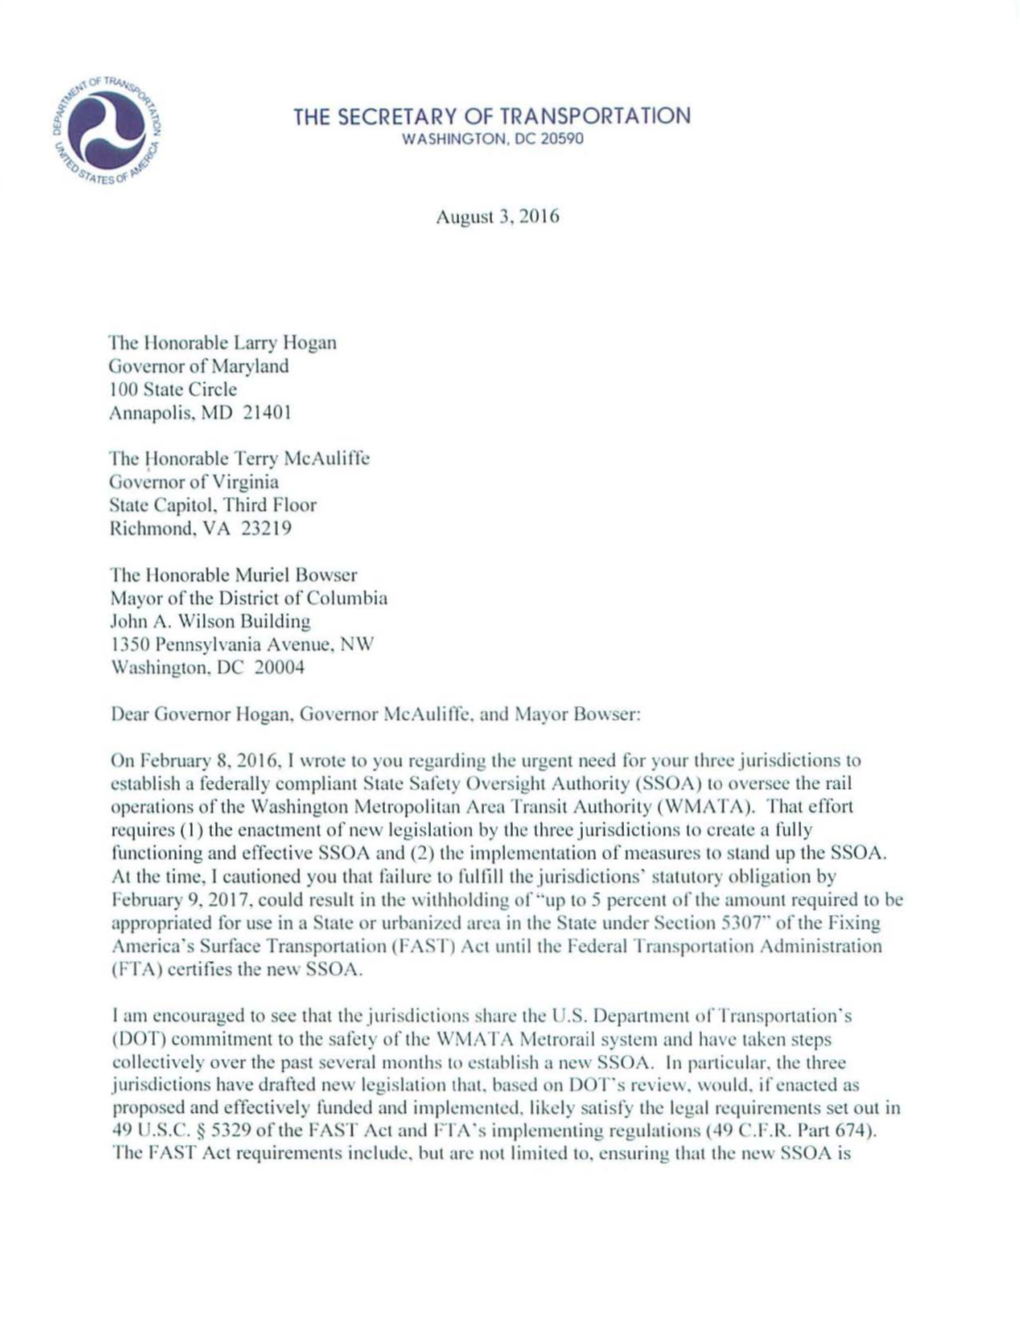 US DOT Secretary Foxx Letter to DC Area Jurisdictions on SSOA